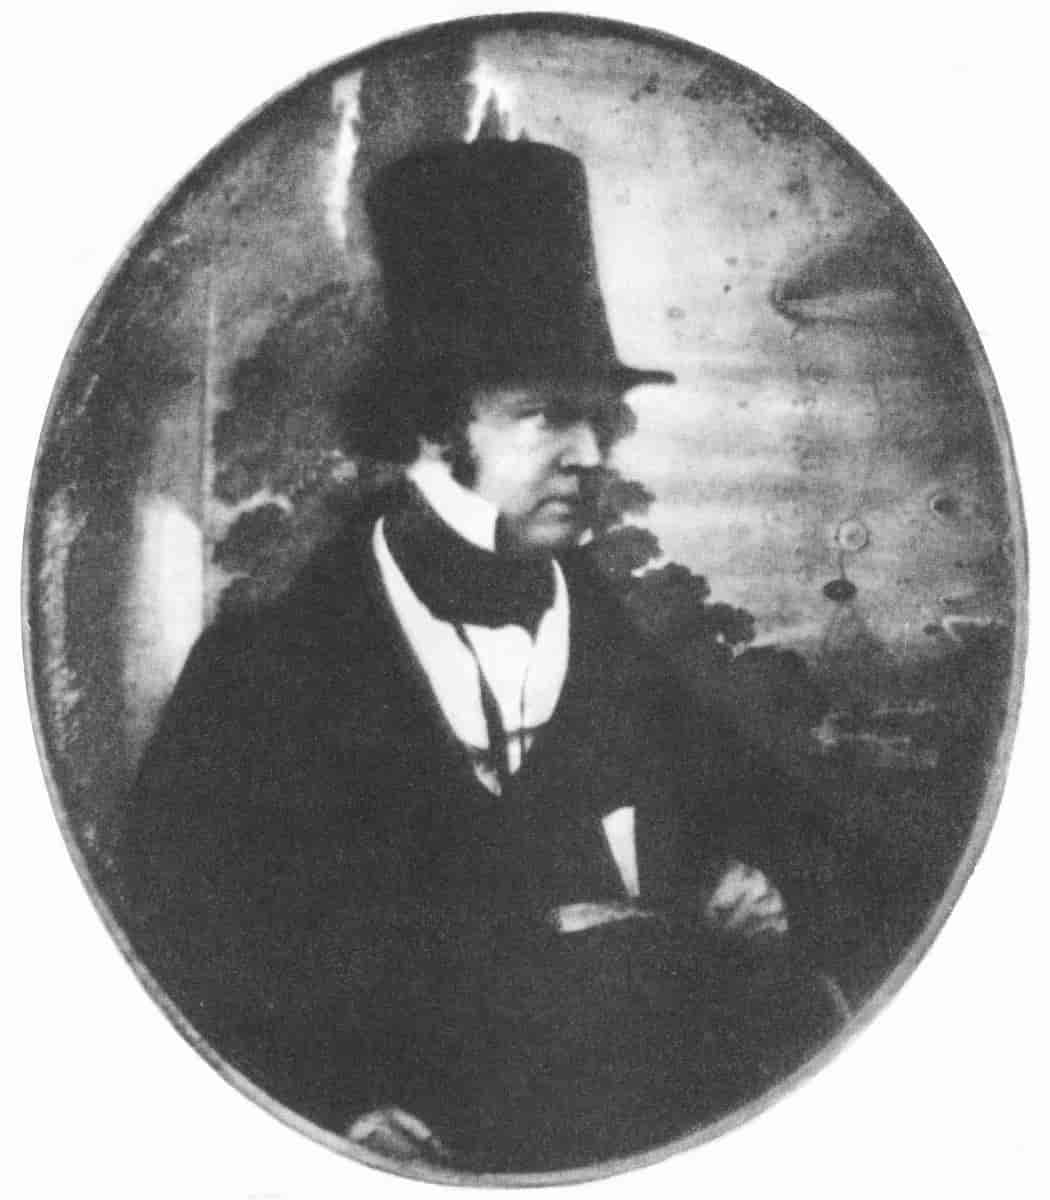 William Henry Fox Talbot